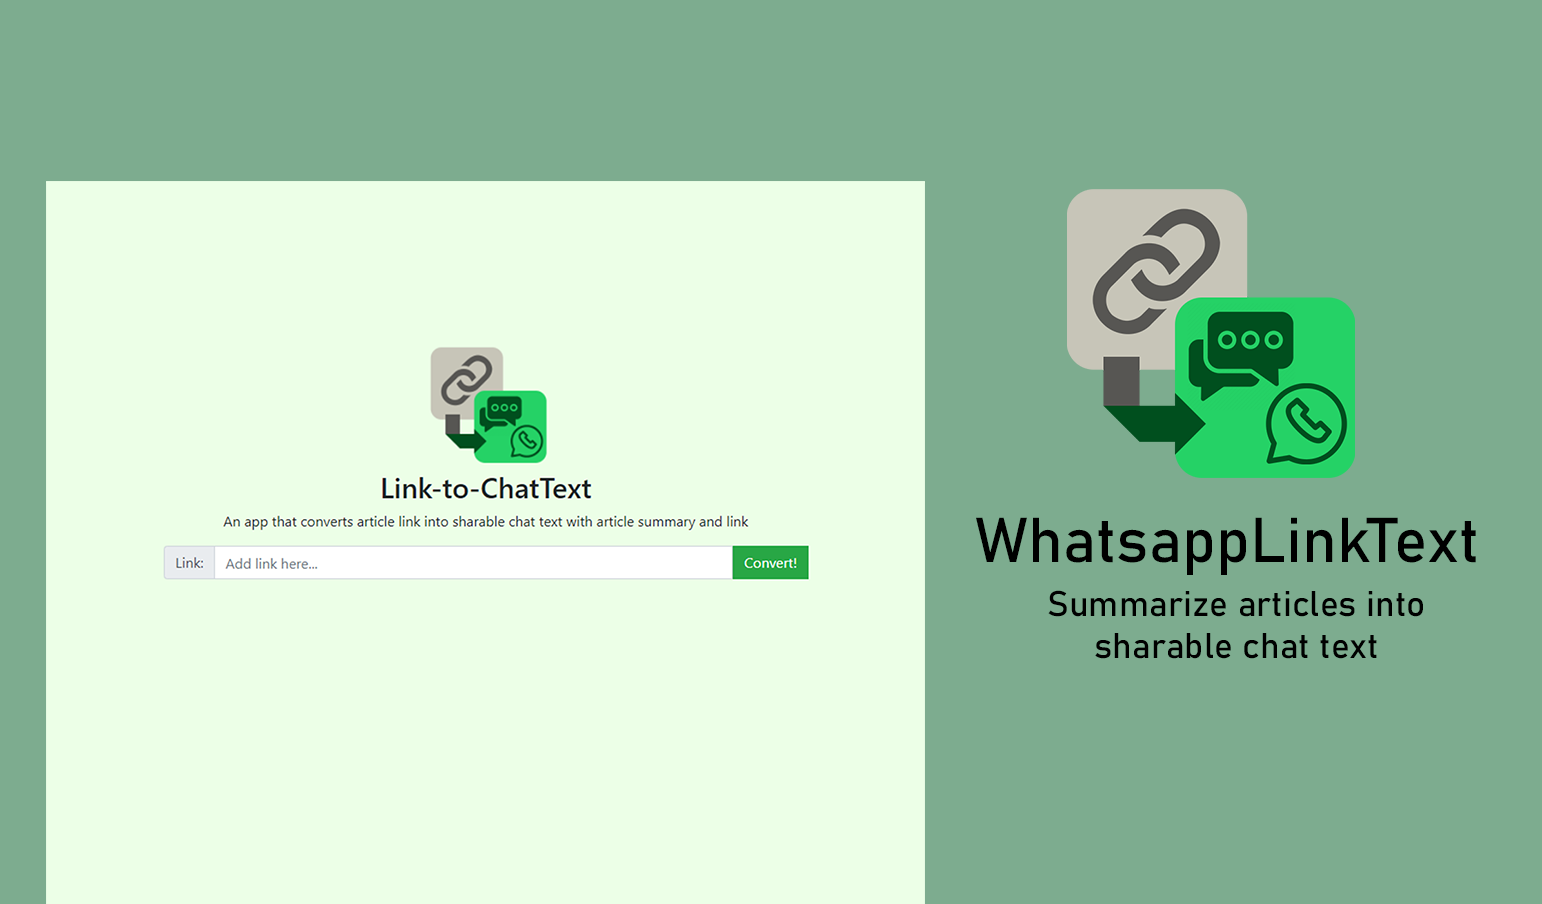 whatsapp-link-text demo